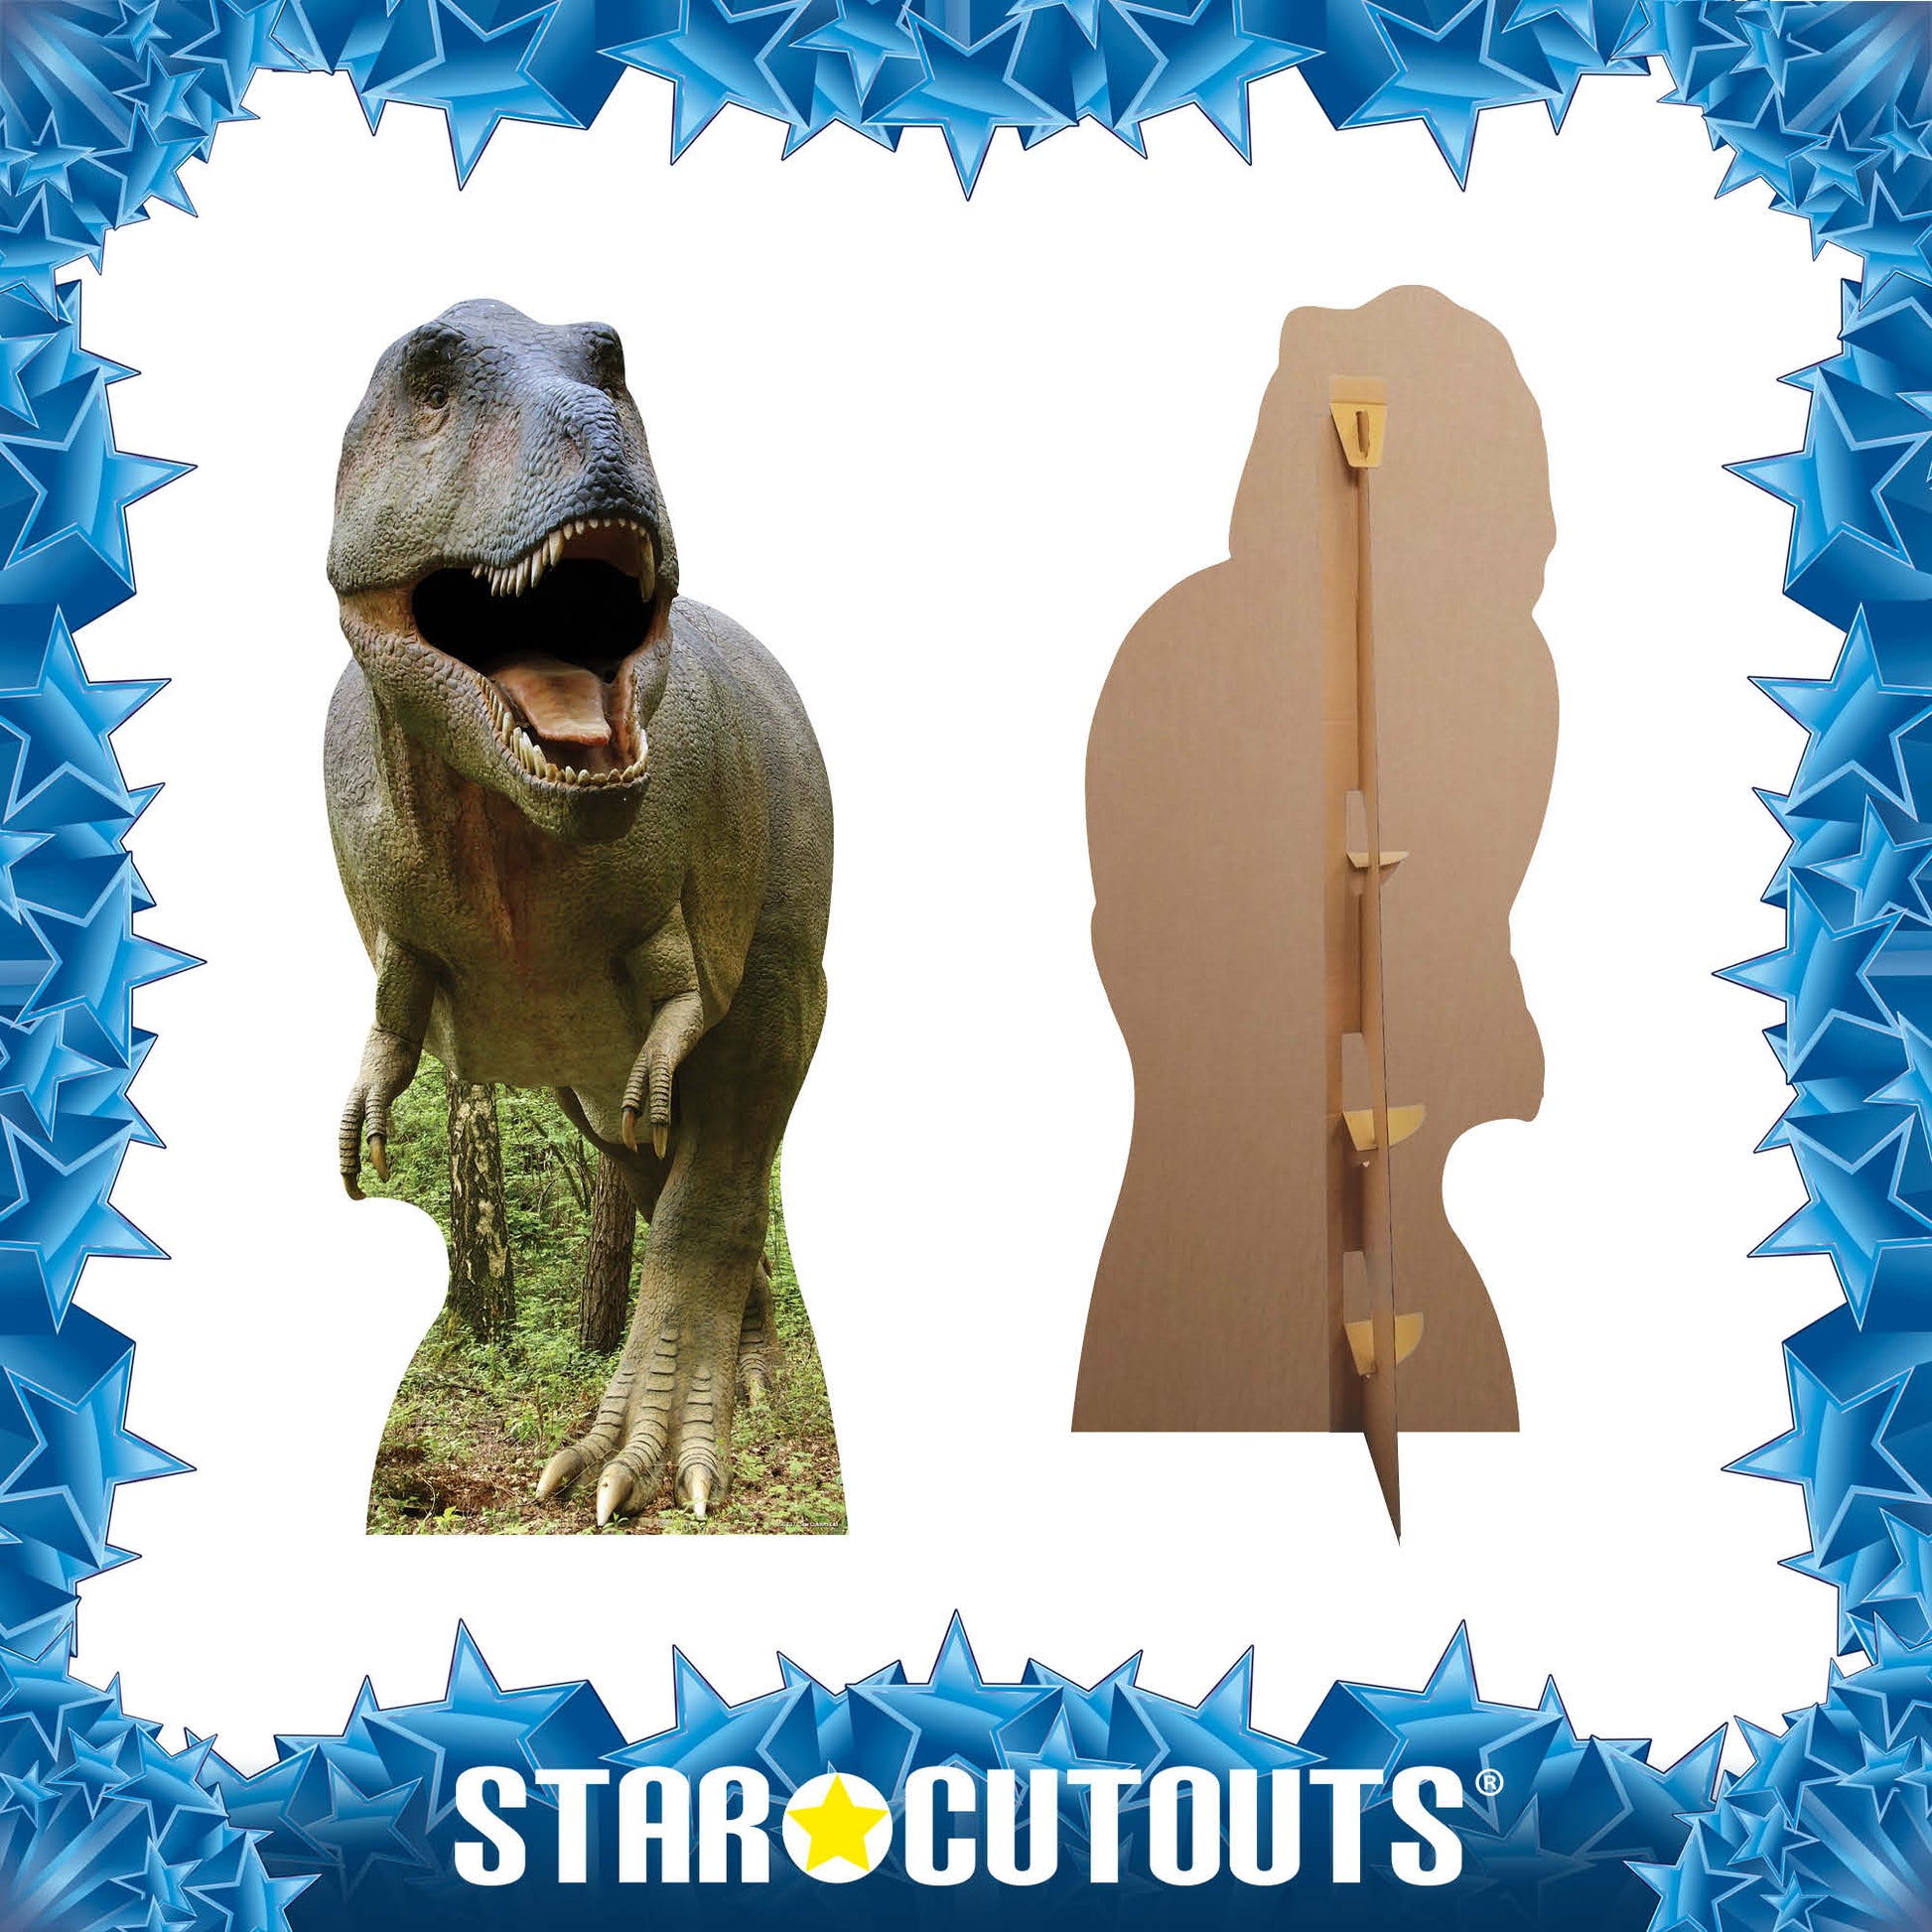 Tyrannosaurus Rex Official Jurassic World Cardboard Cutout / Standee